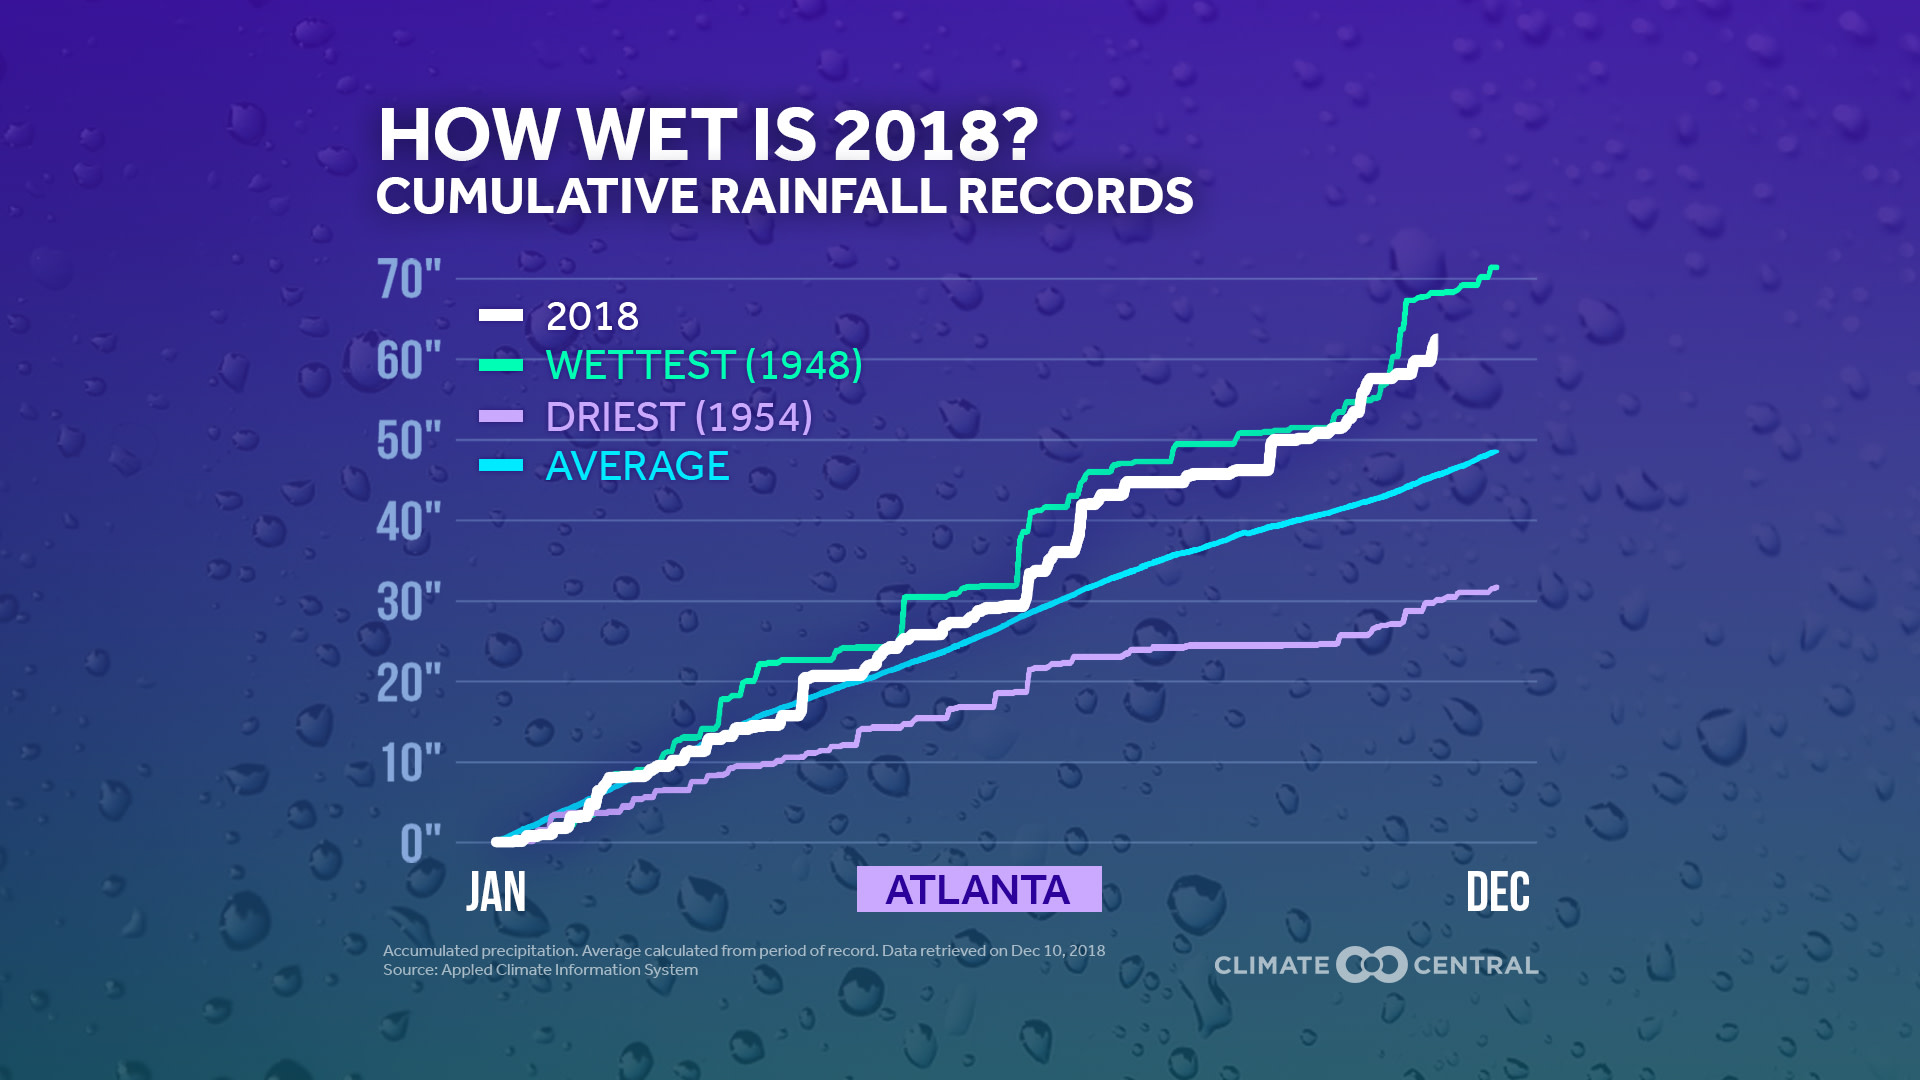 Market - Rainfall Records of 2018